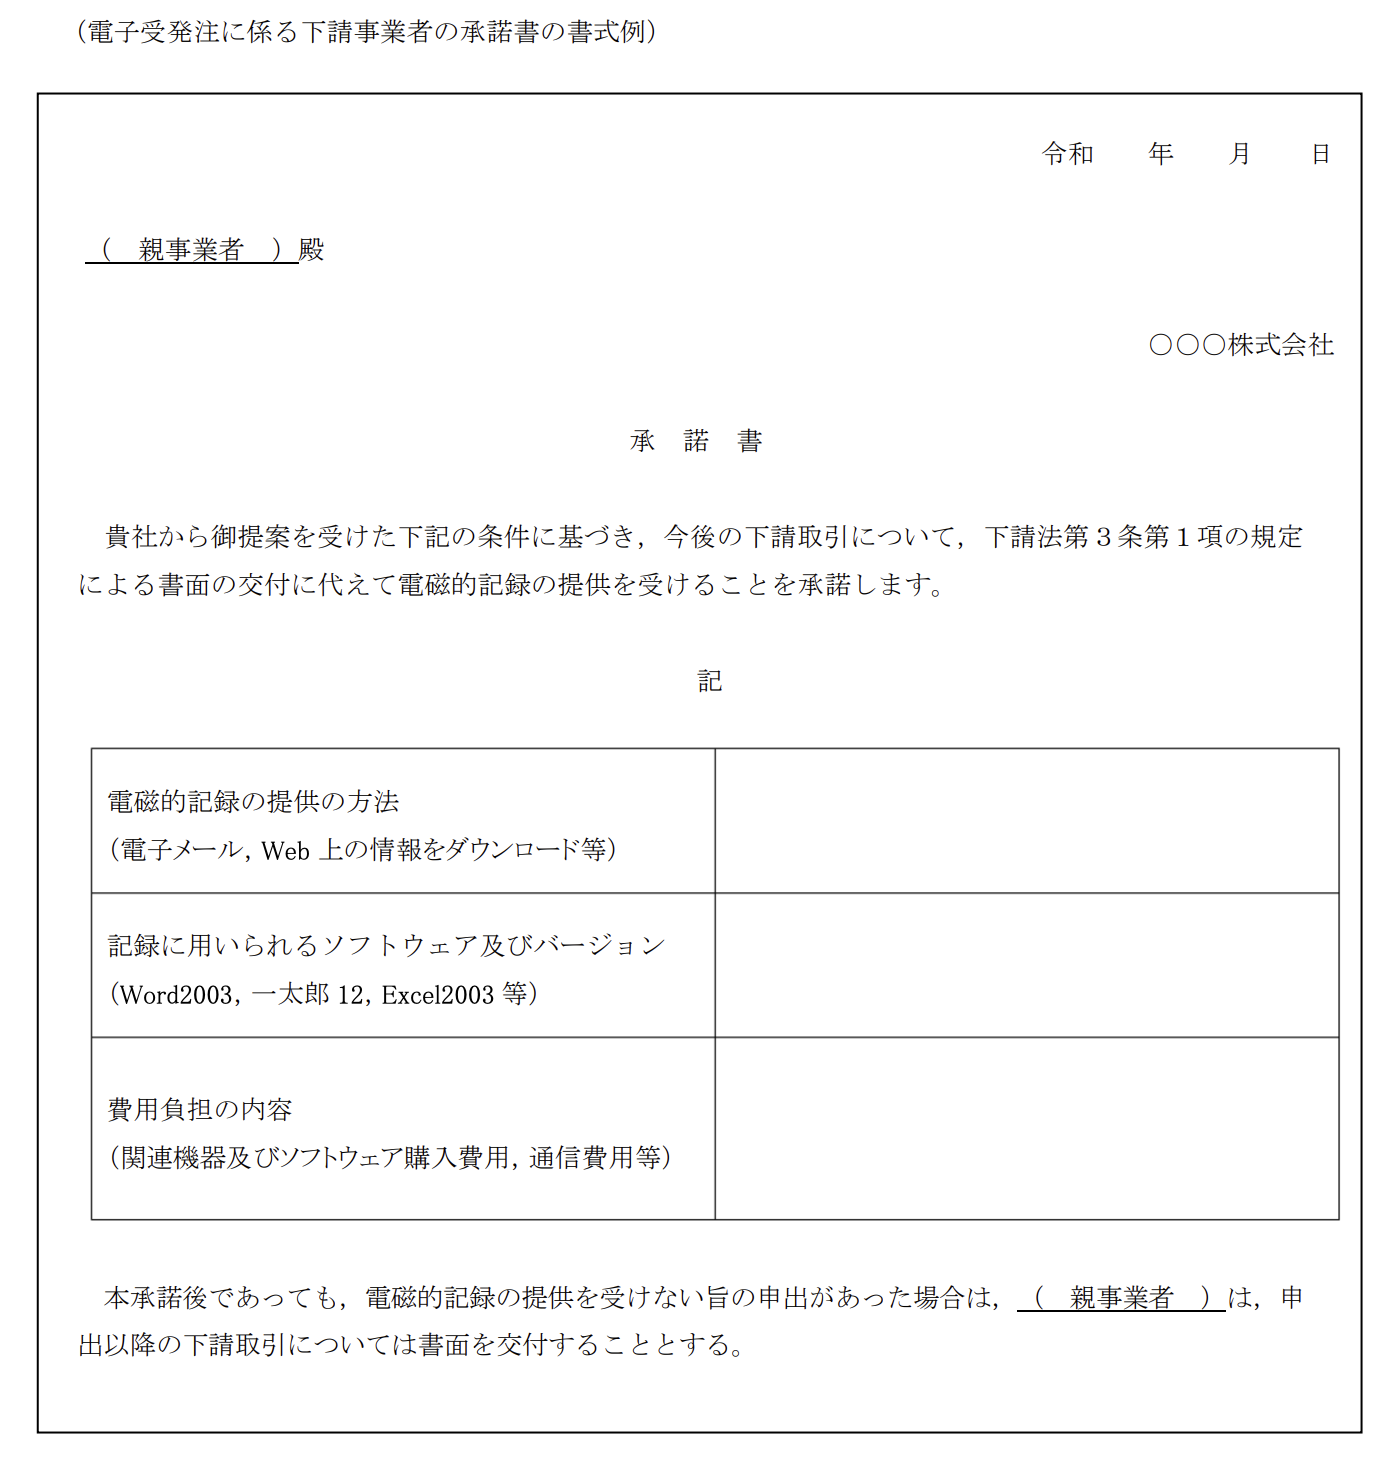 https://www.jftc.go.jp/houdou/panfu_files/shitauketextbook.pdf